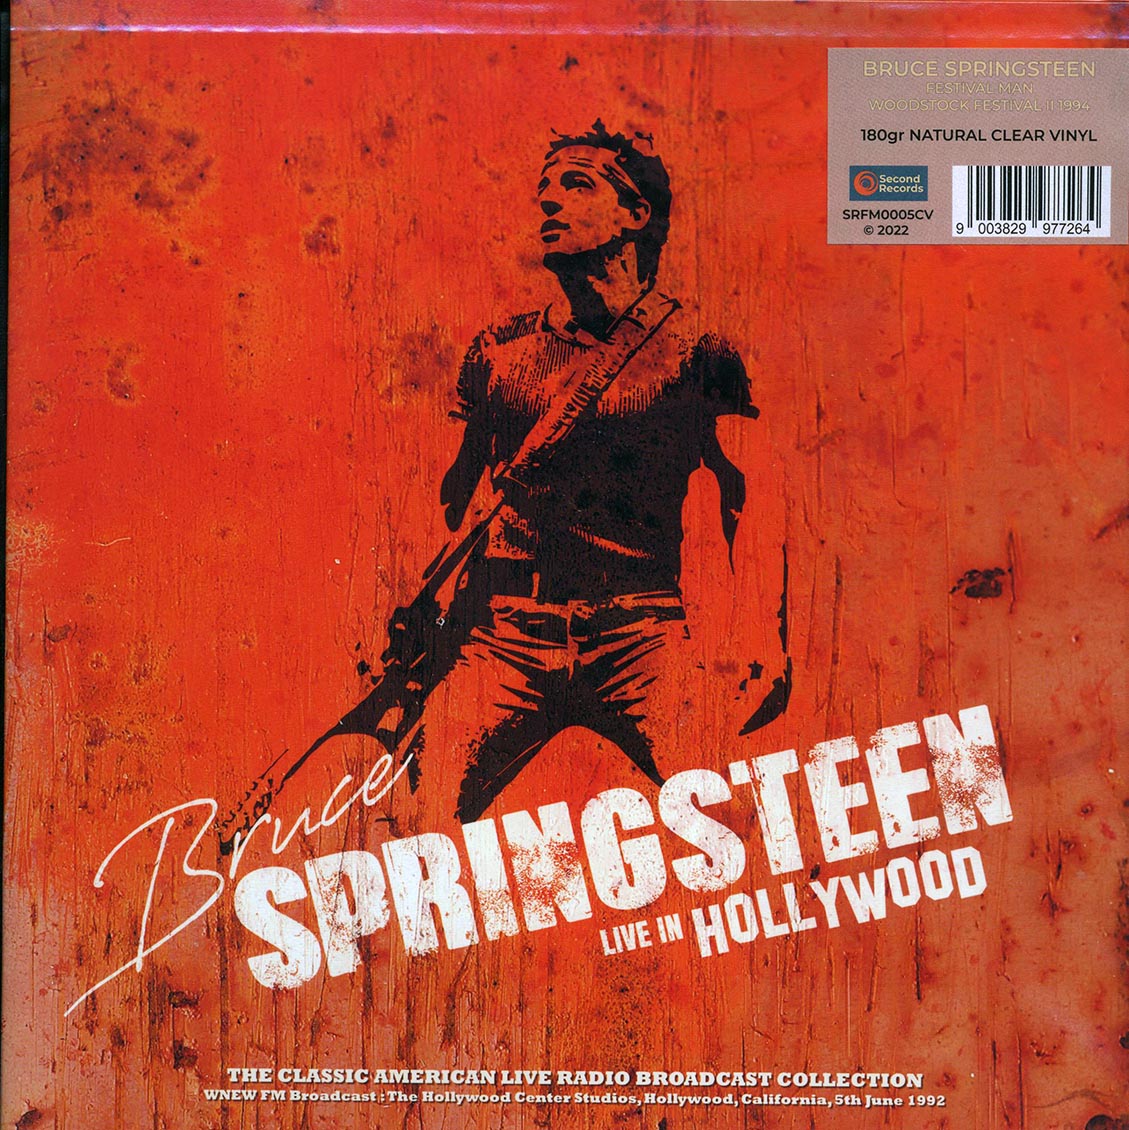 Bruce Springsteen - Live In Hollywood: Hollywood Center Studios, 5th June 1992 (180g) (clear vinyl) - Vinyl LP